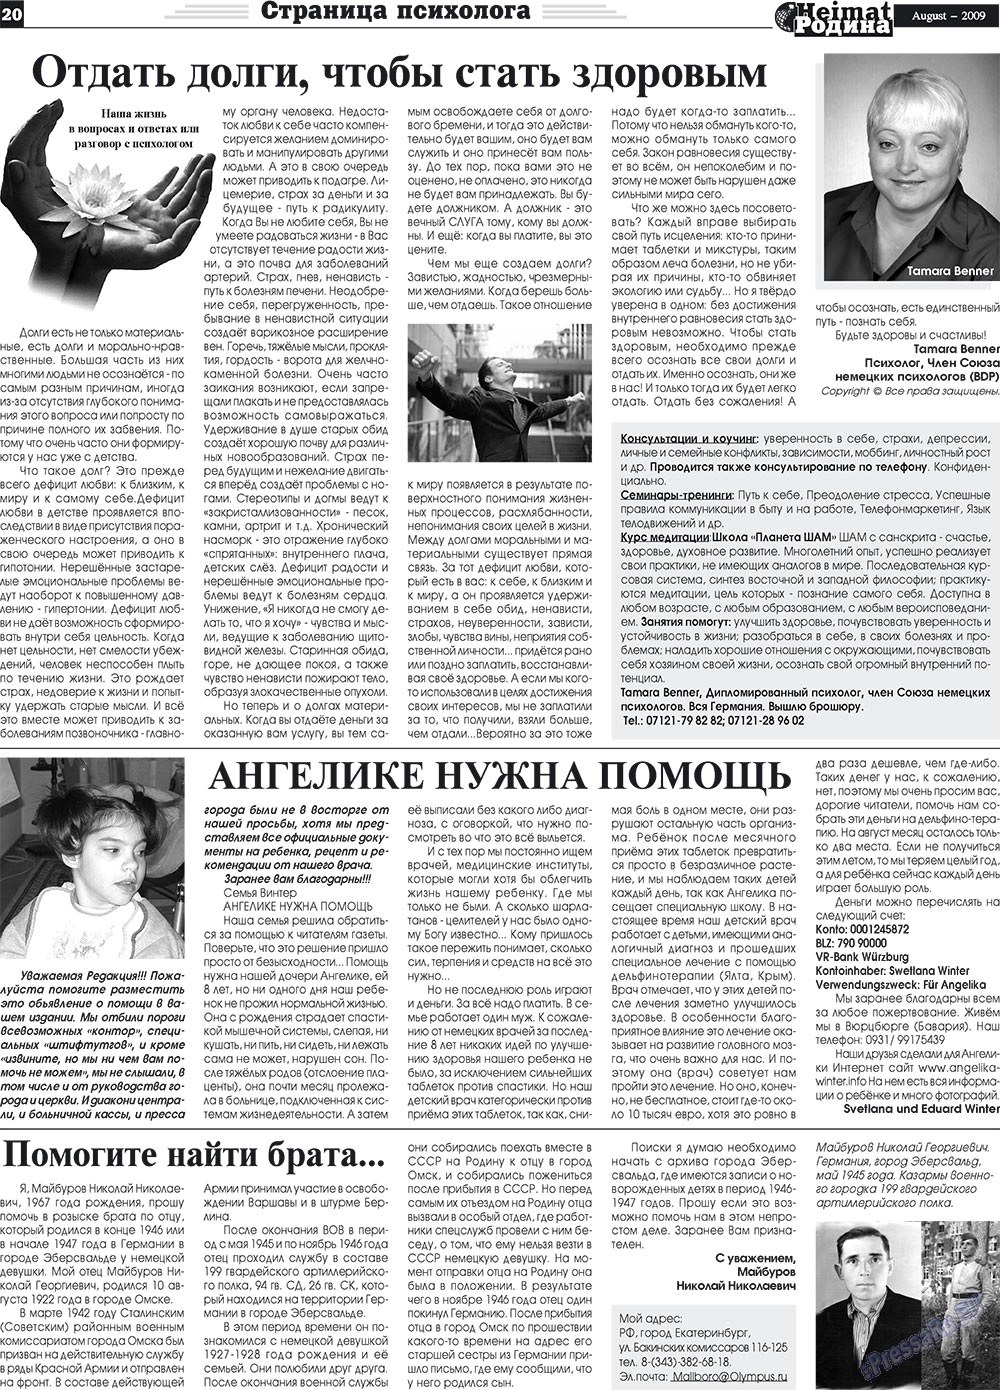 Heimat-Родина, газета. 2009 №8 стр.20